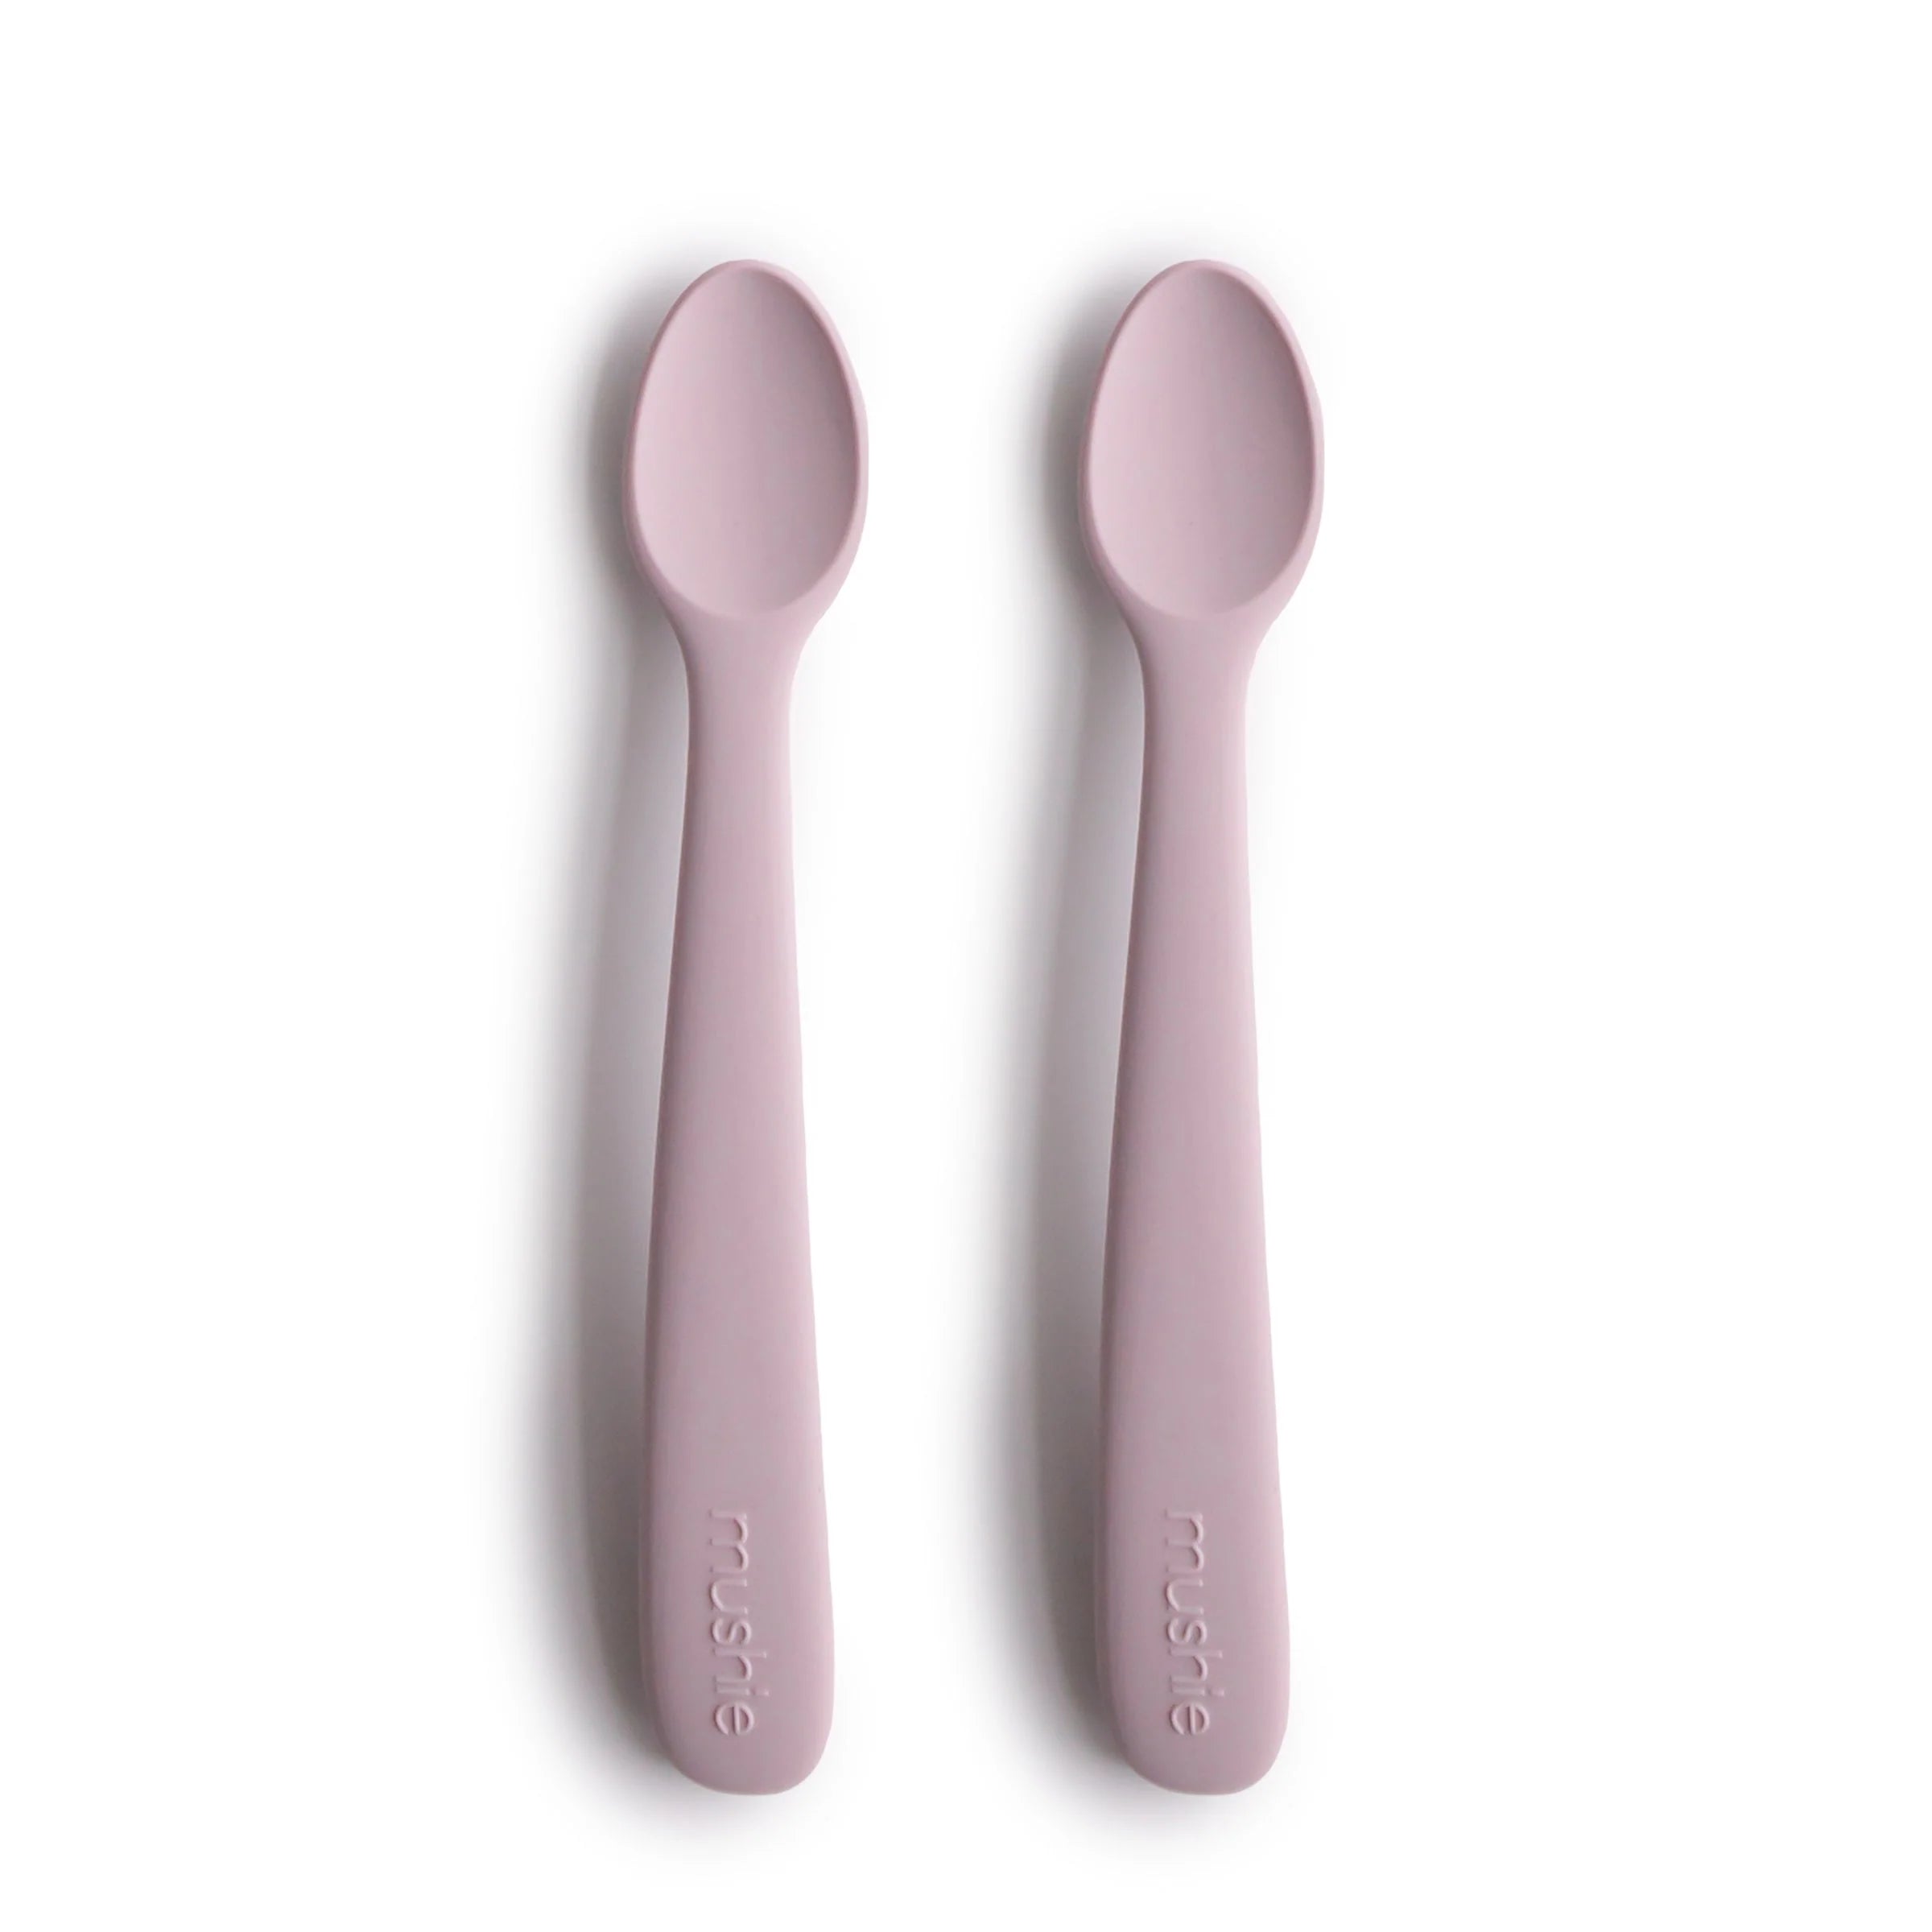 Mushie Silicone Feeding Spoons (2-Pack) Blush/Shifting Sand